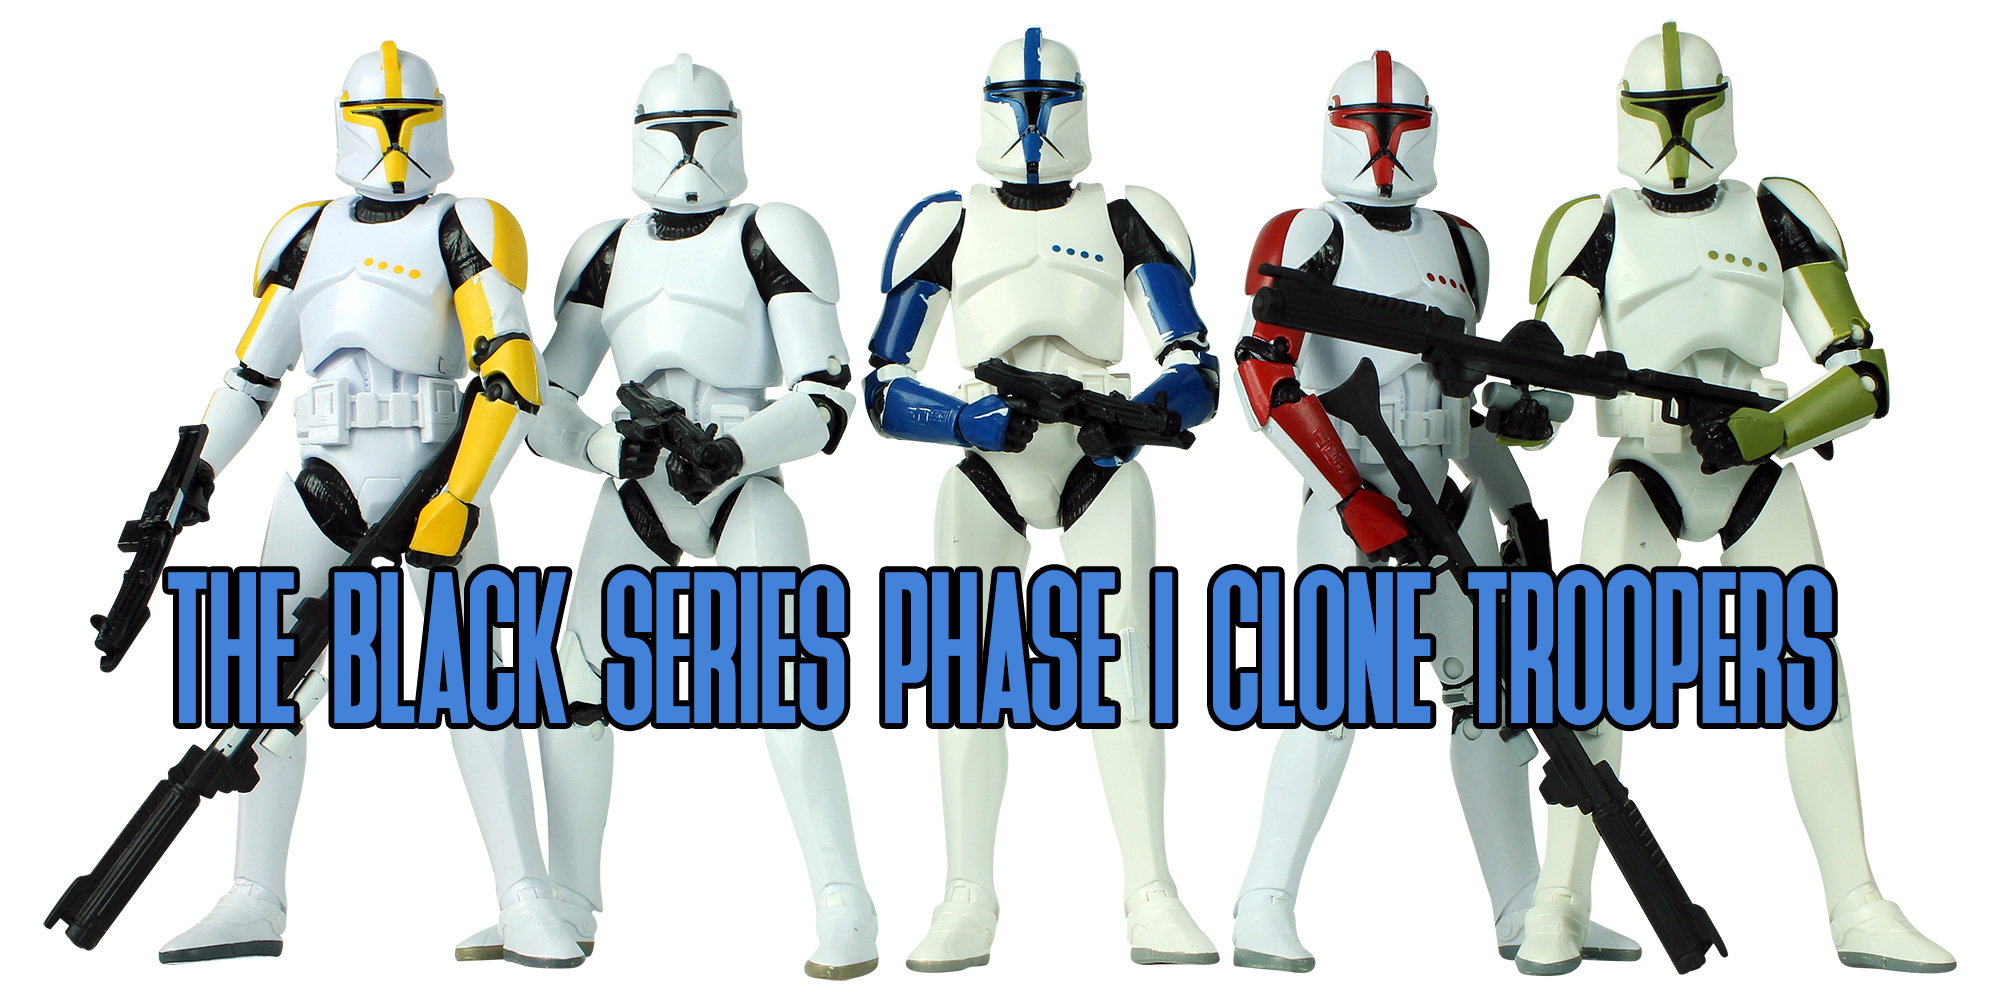 Black Series Clone Troopers Phase 1